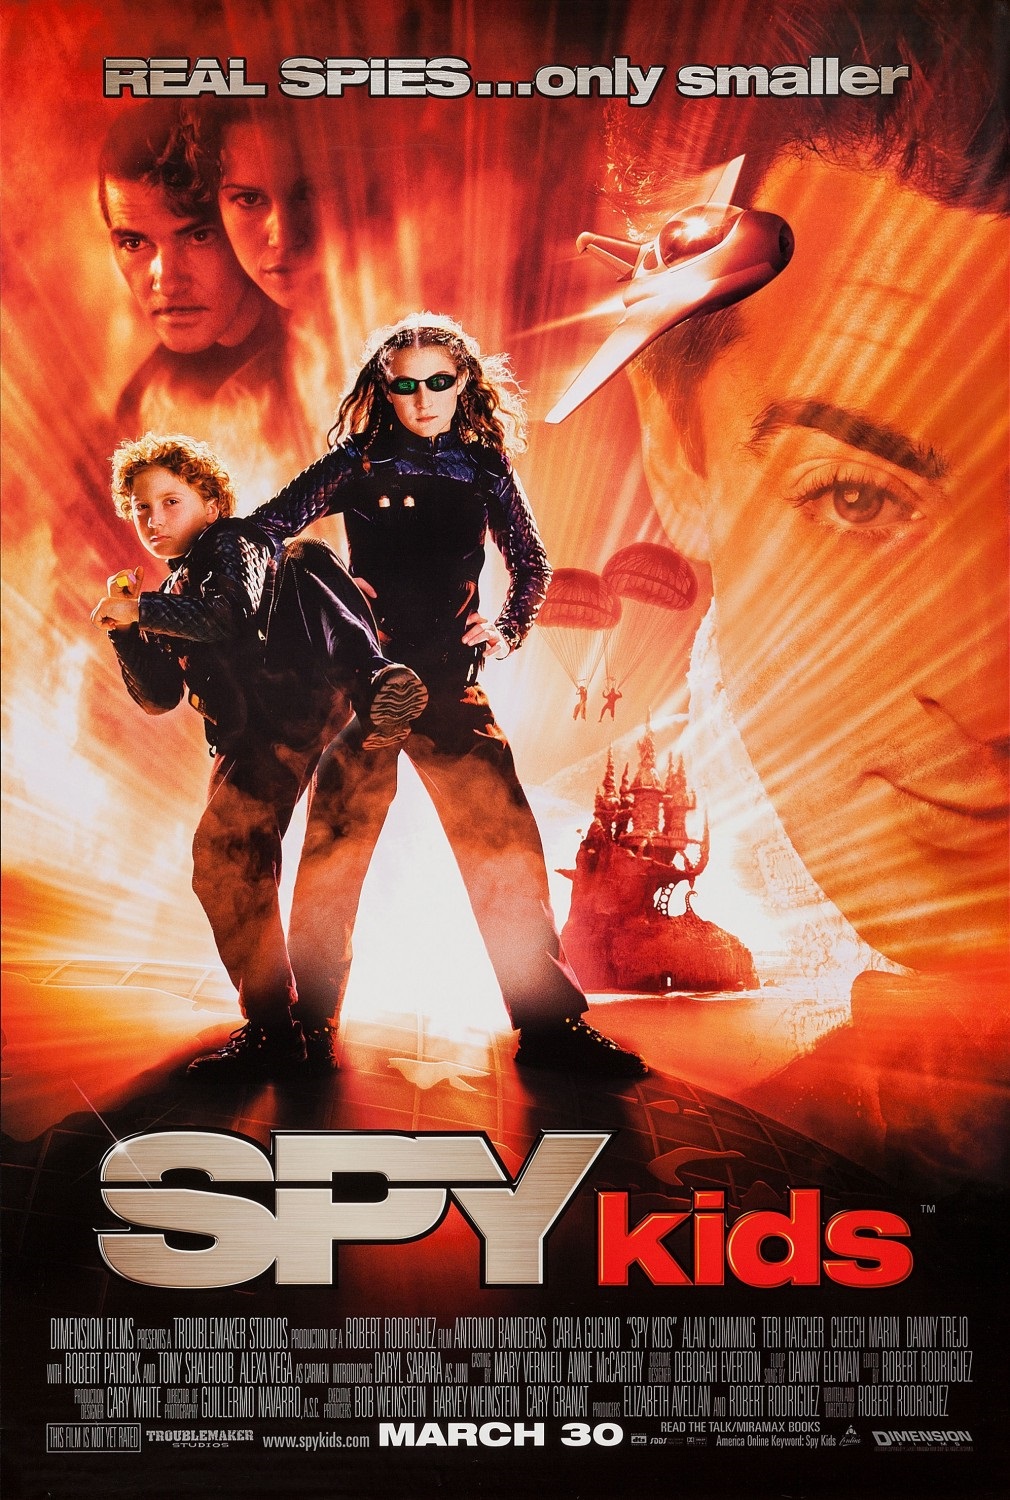 Spy kids US poster.jpg